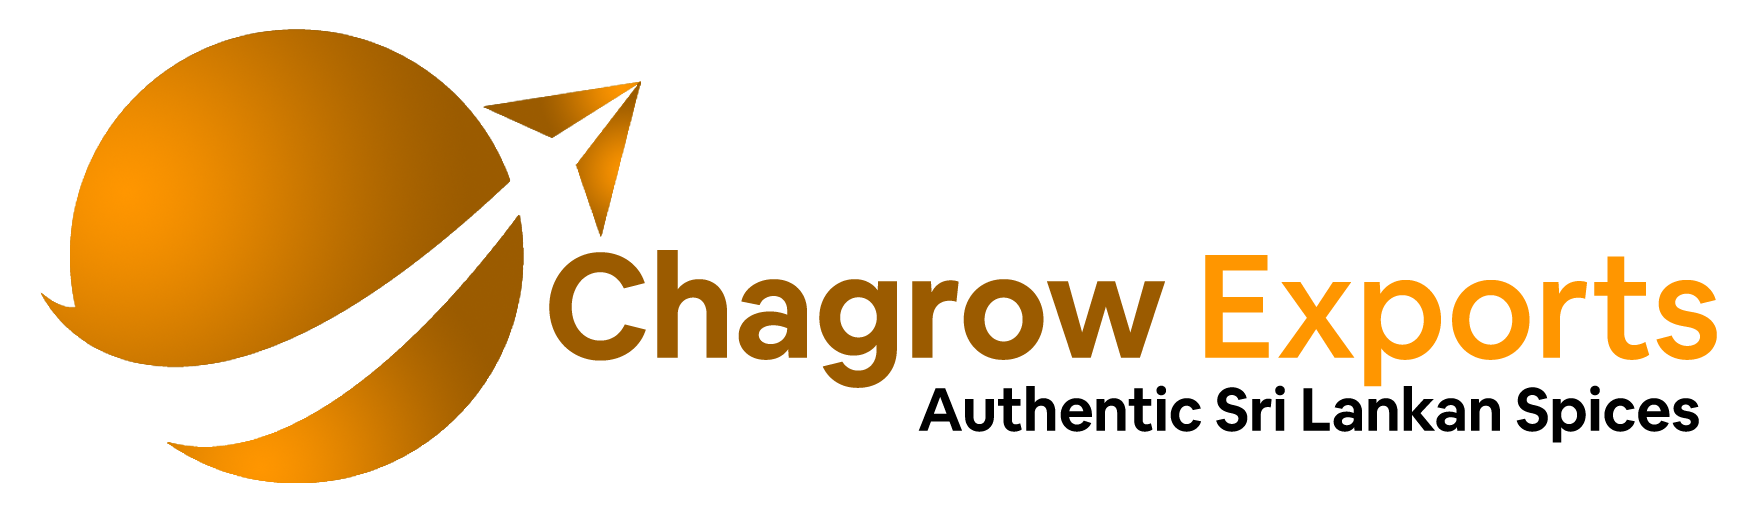 Chagrow Cinnamon Exporters Logo Colored